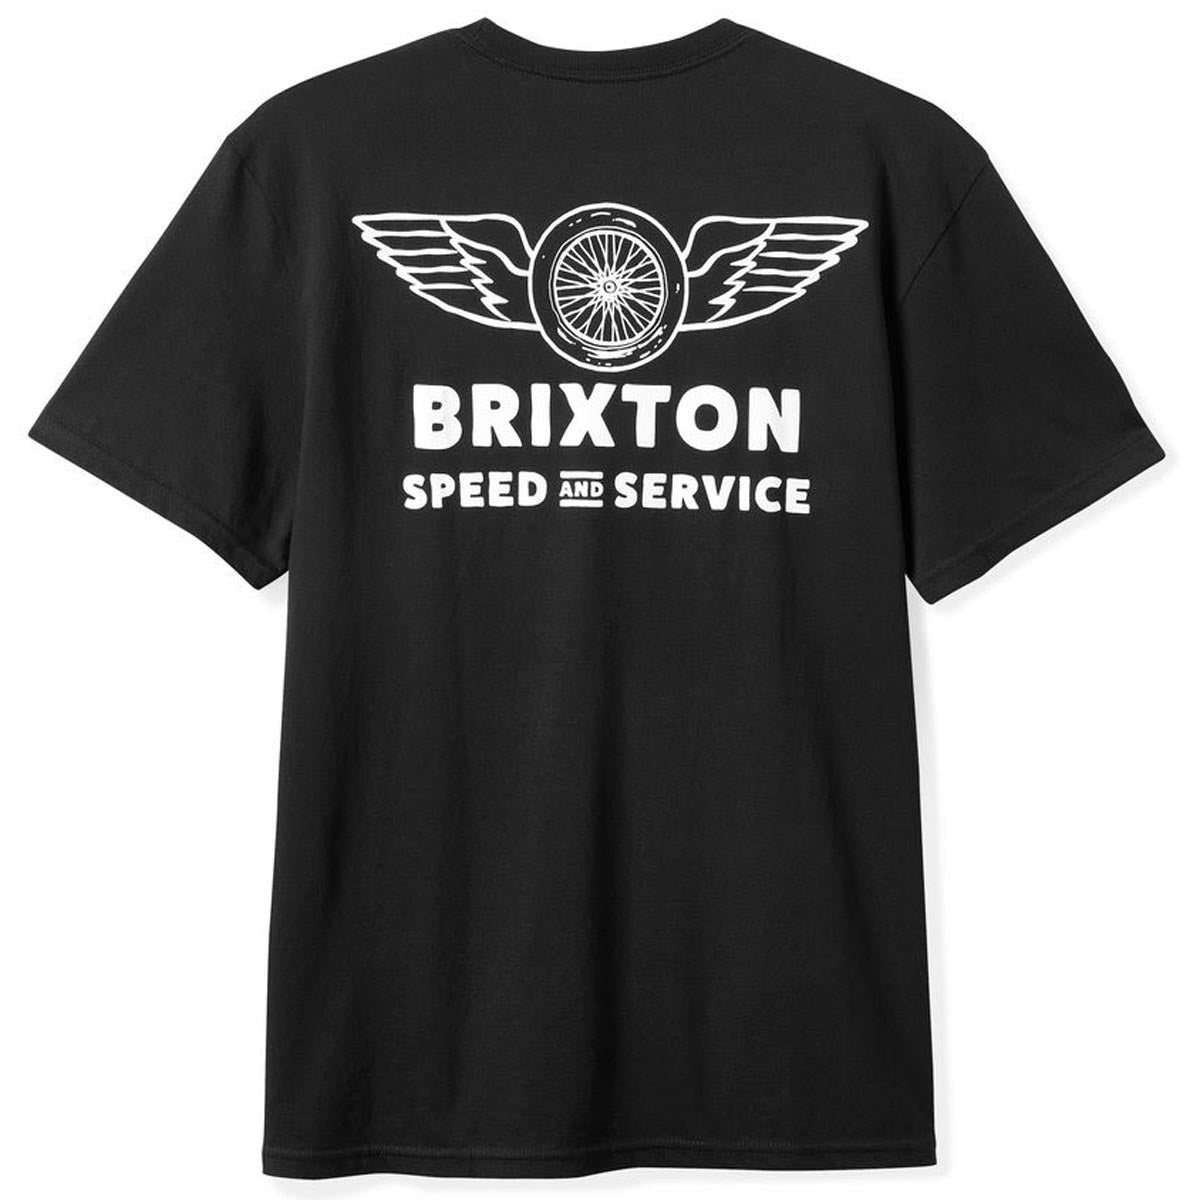 Brixton Spoke T-Shirt - Black image 1